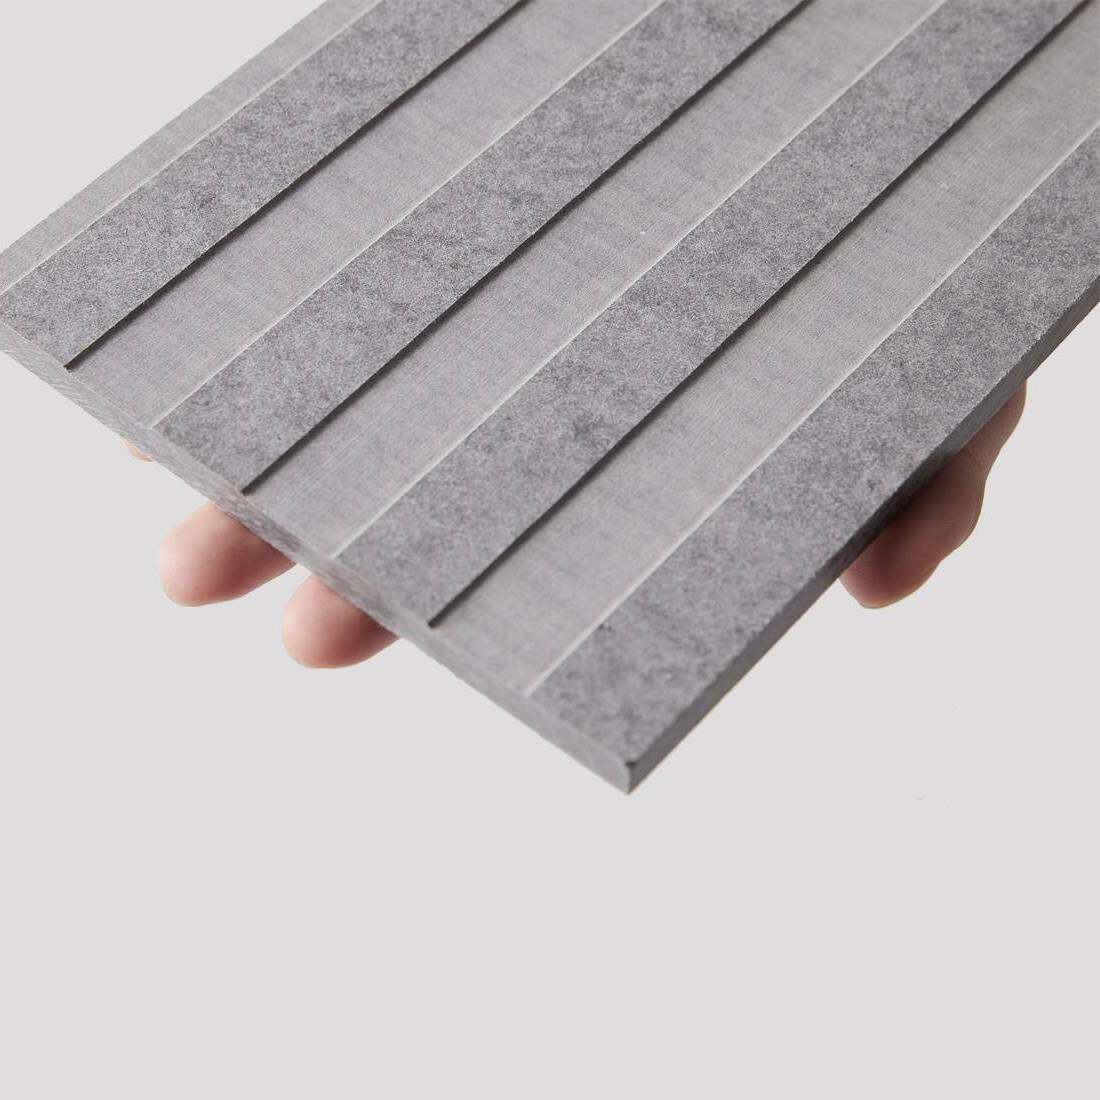 grooving decoration fiber cement board